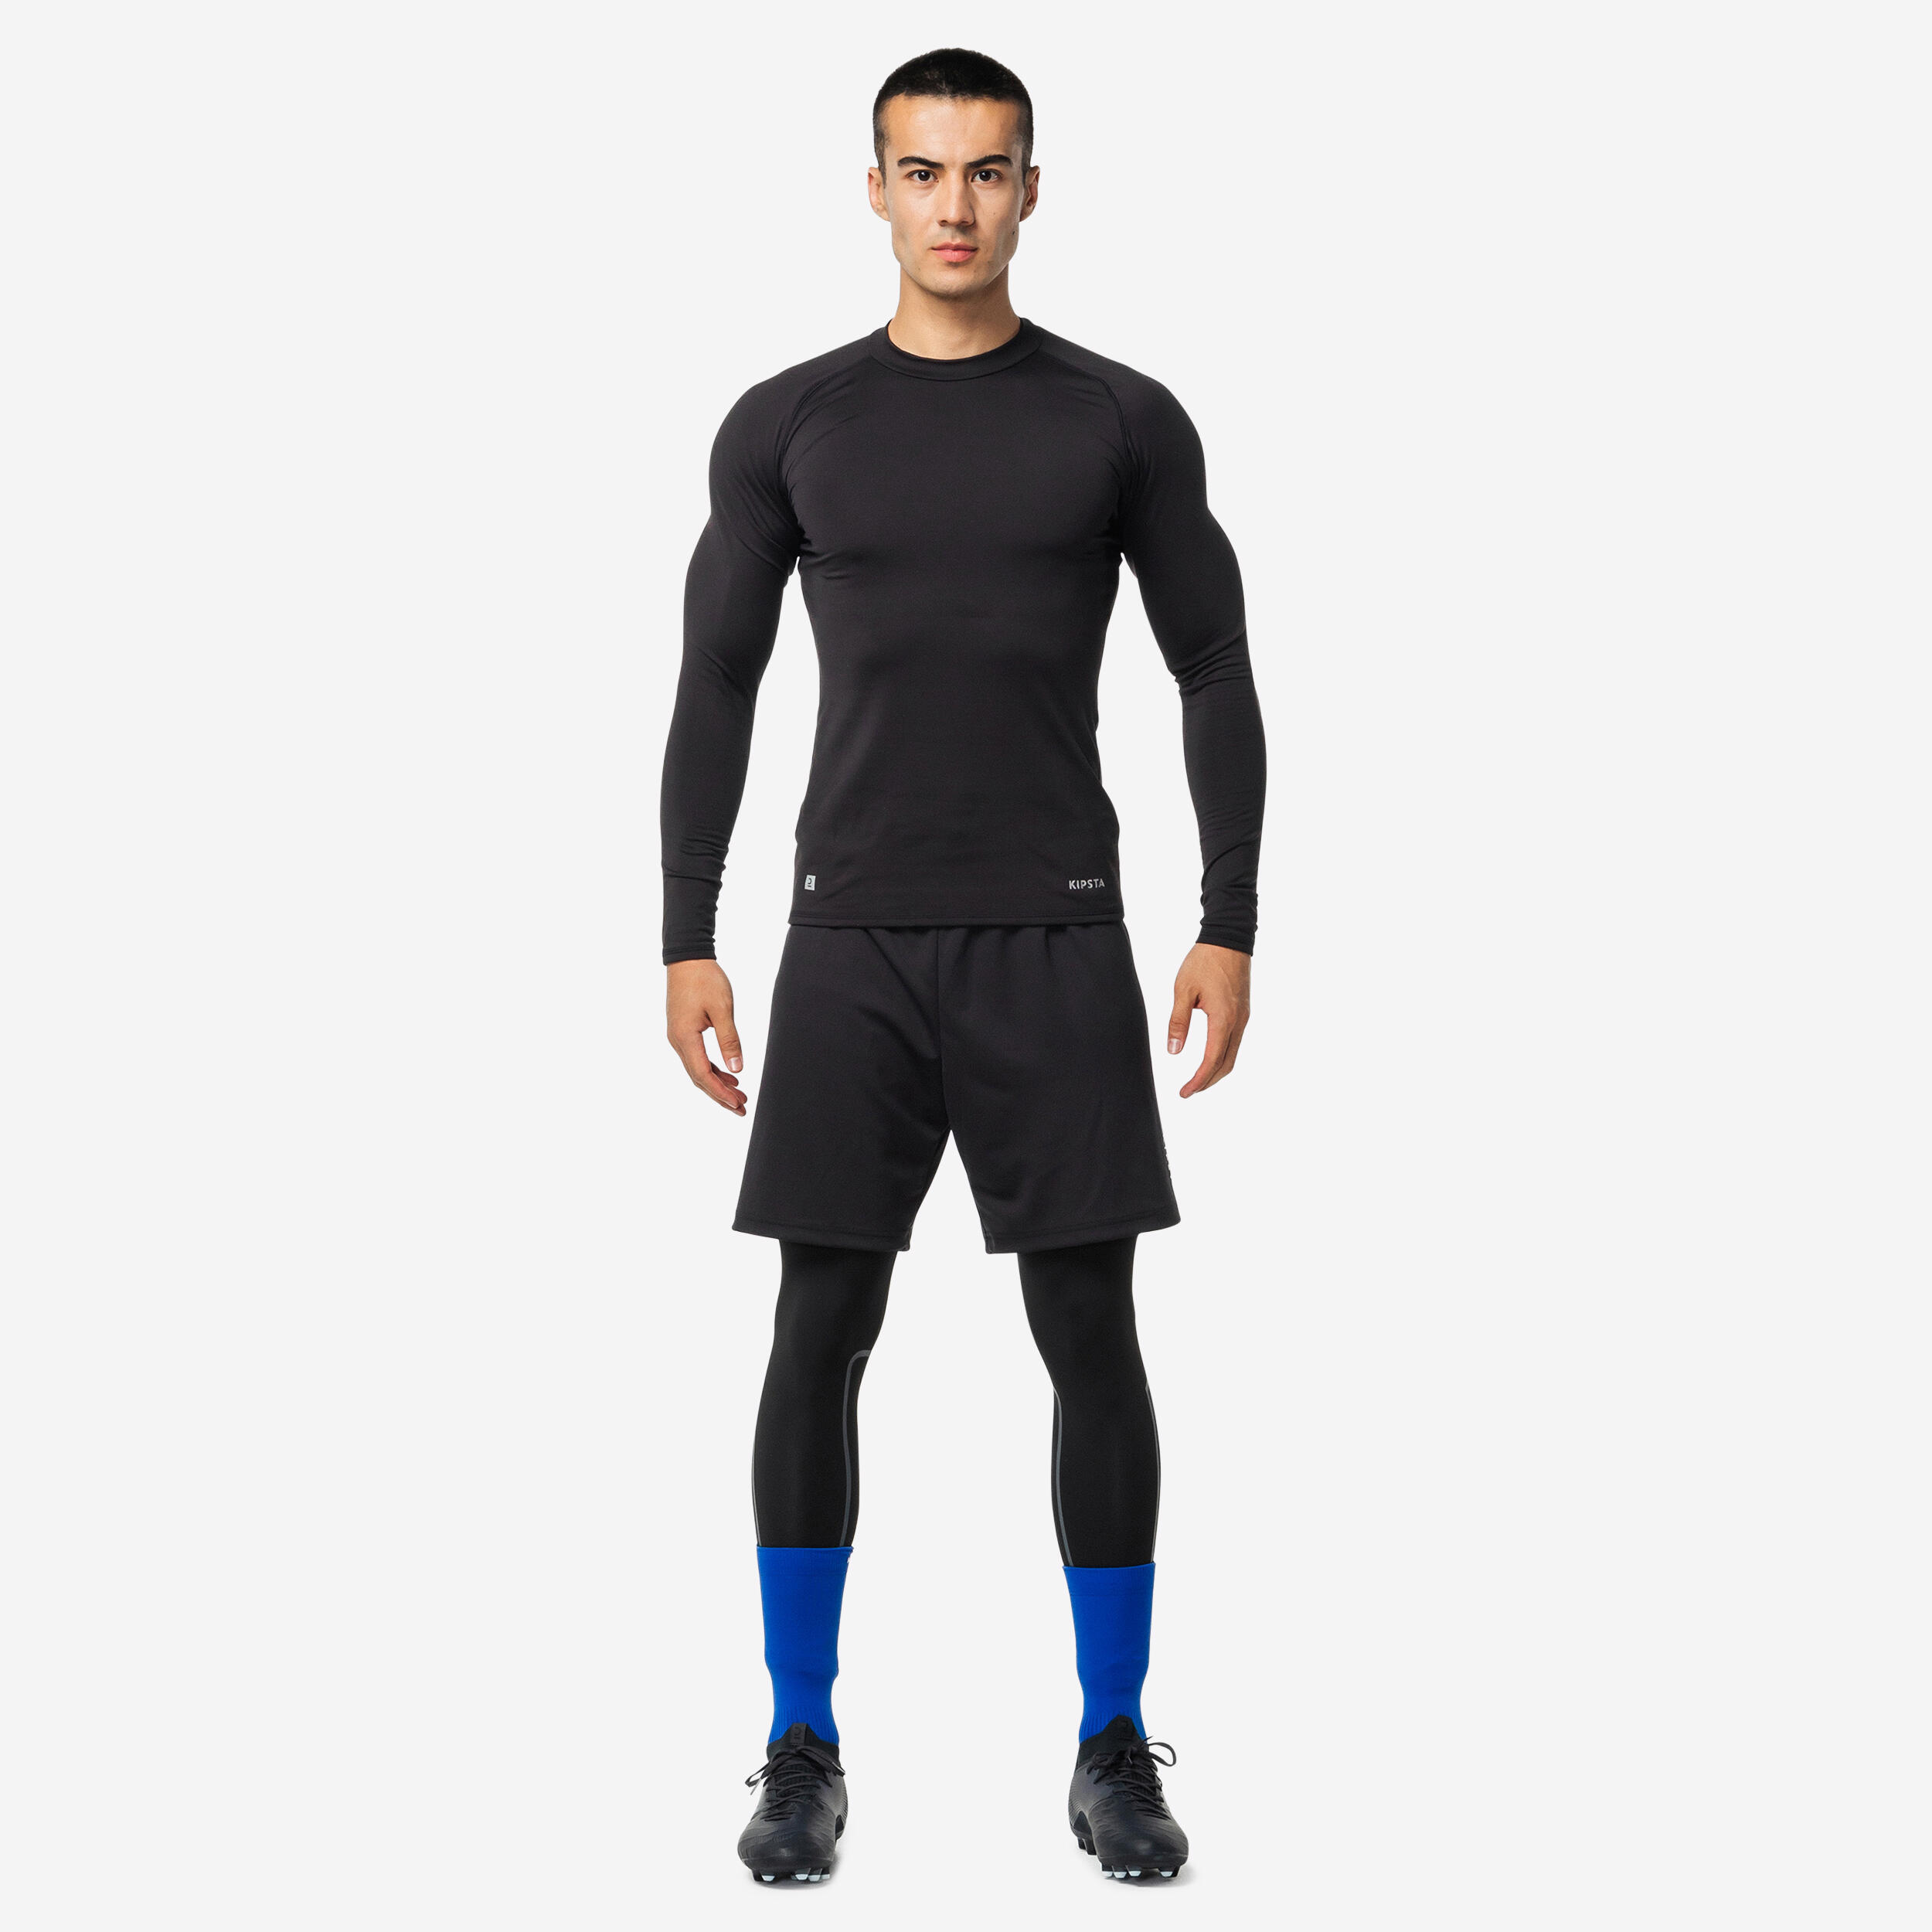 Adult Long-Sleeved Thermal Football Base Layer Top Keepcomfort 100 - Black 1/7